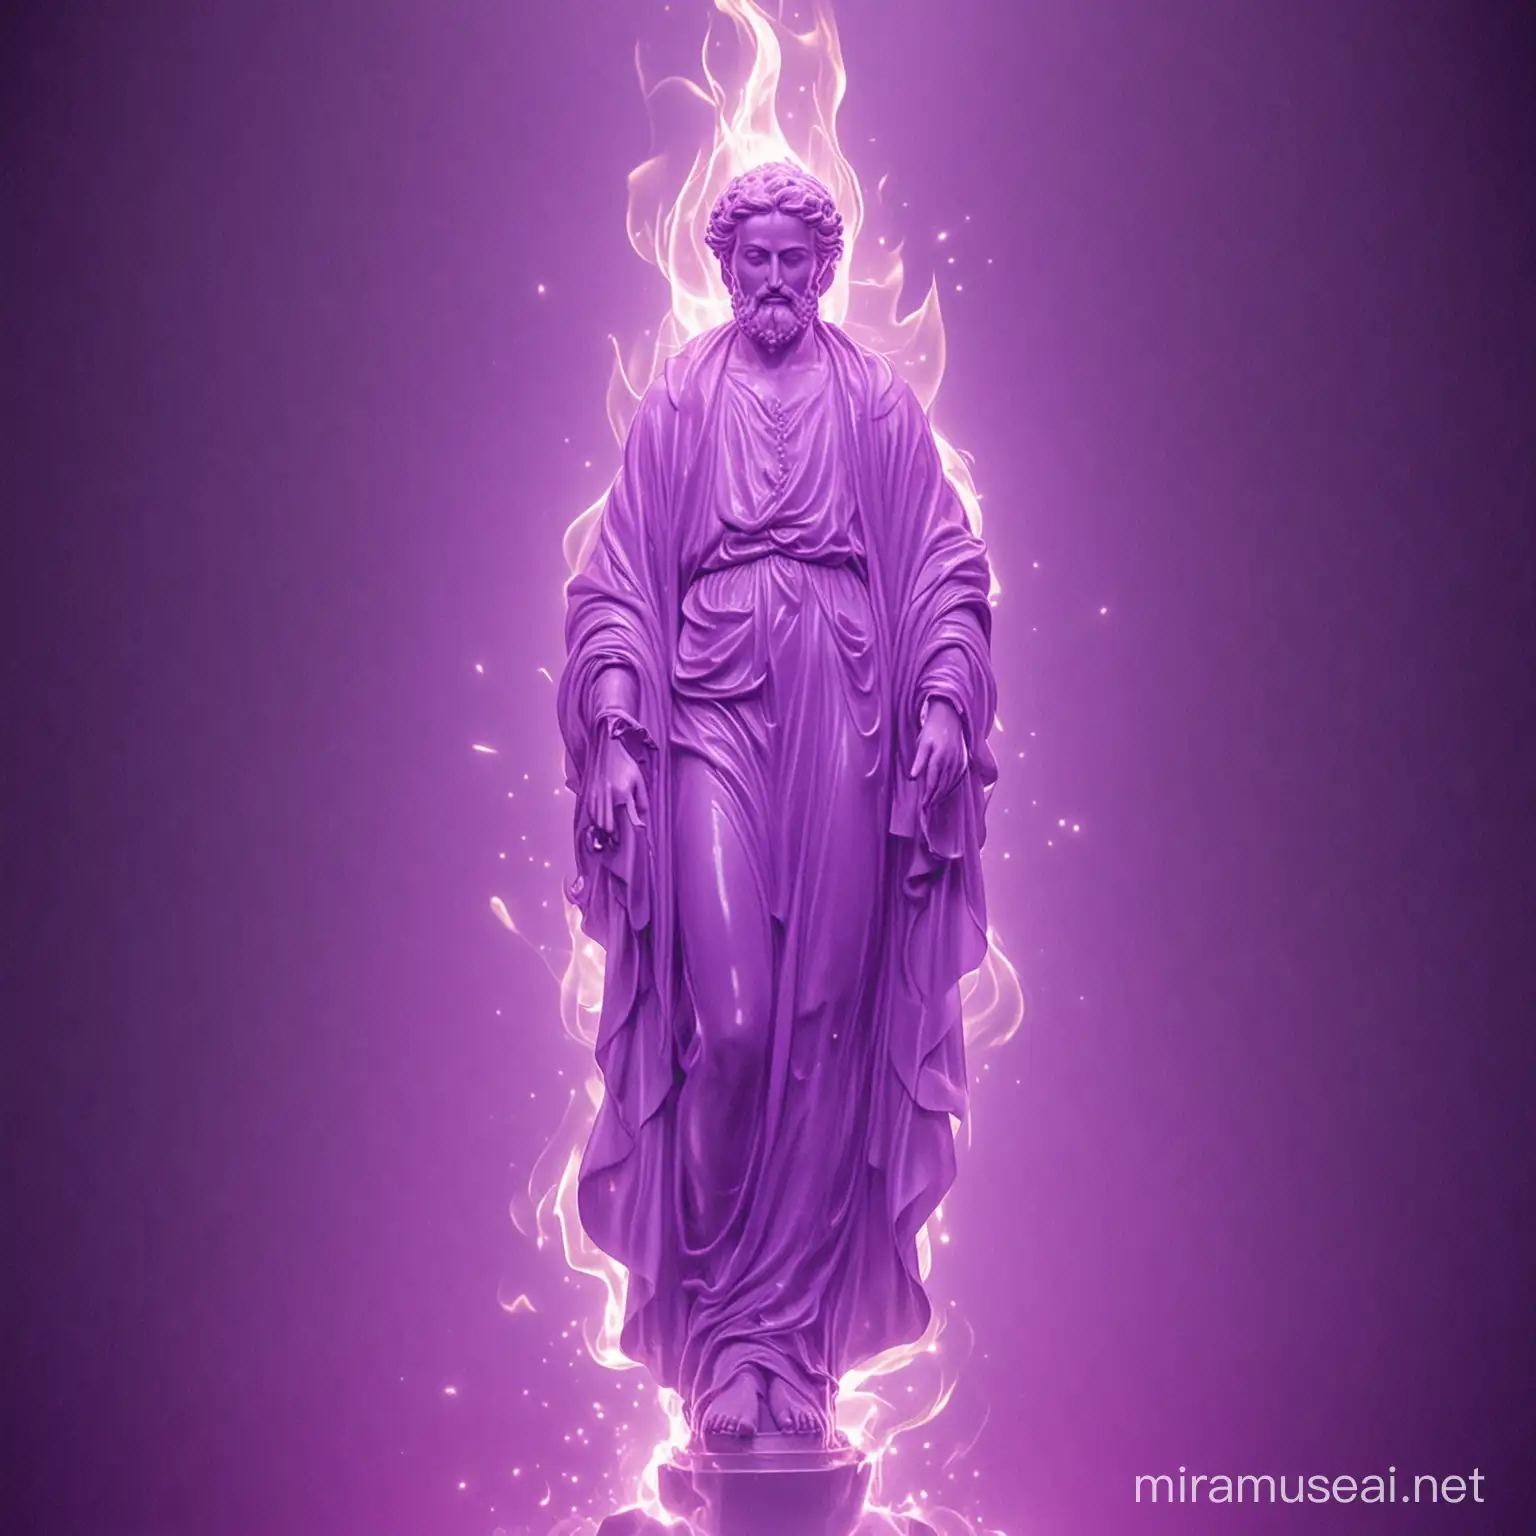 Mystical Violet Flame of Saint Germain